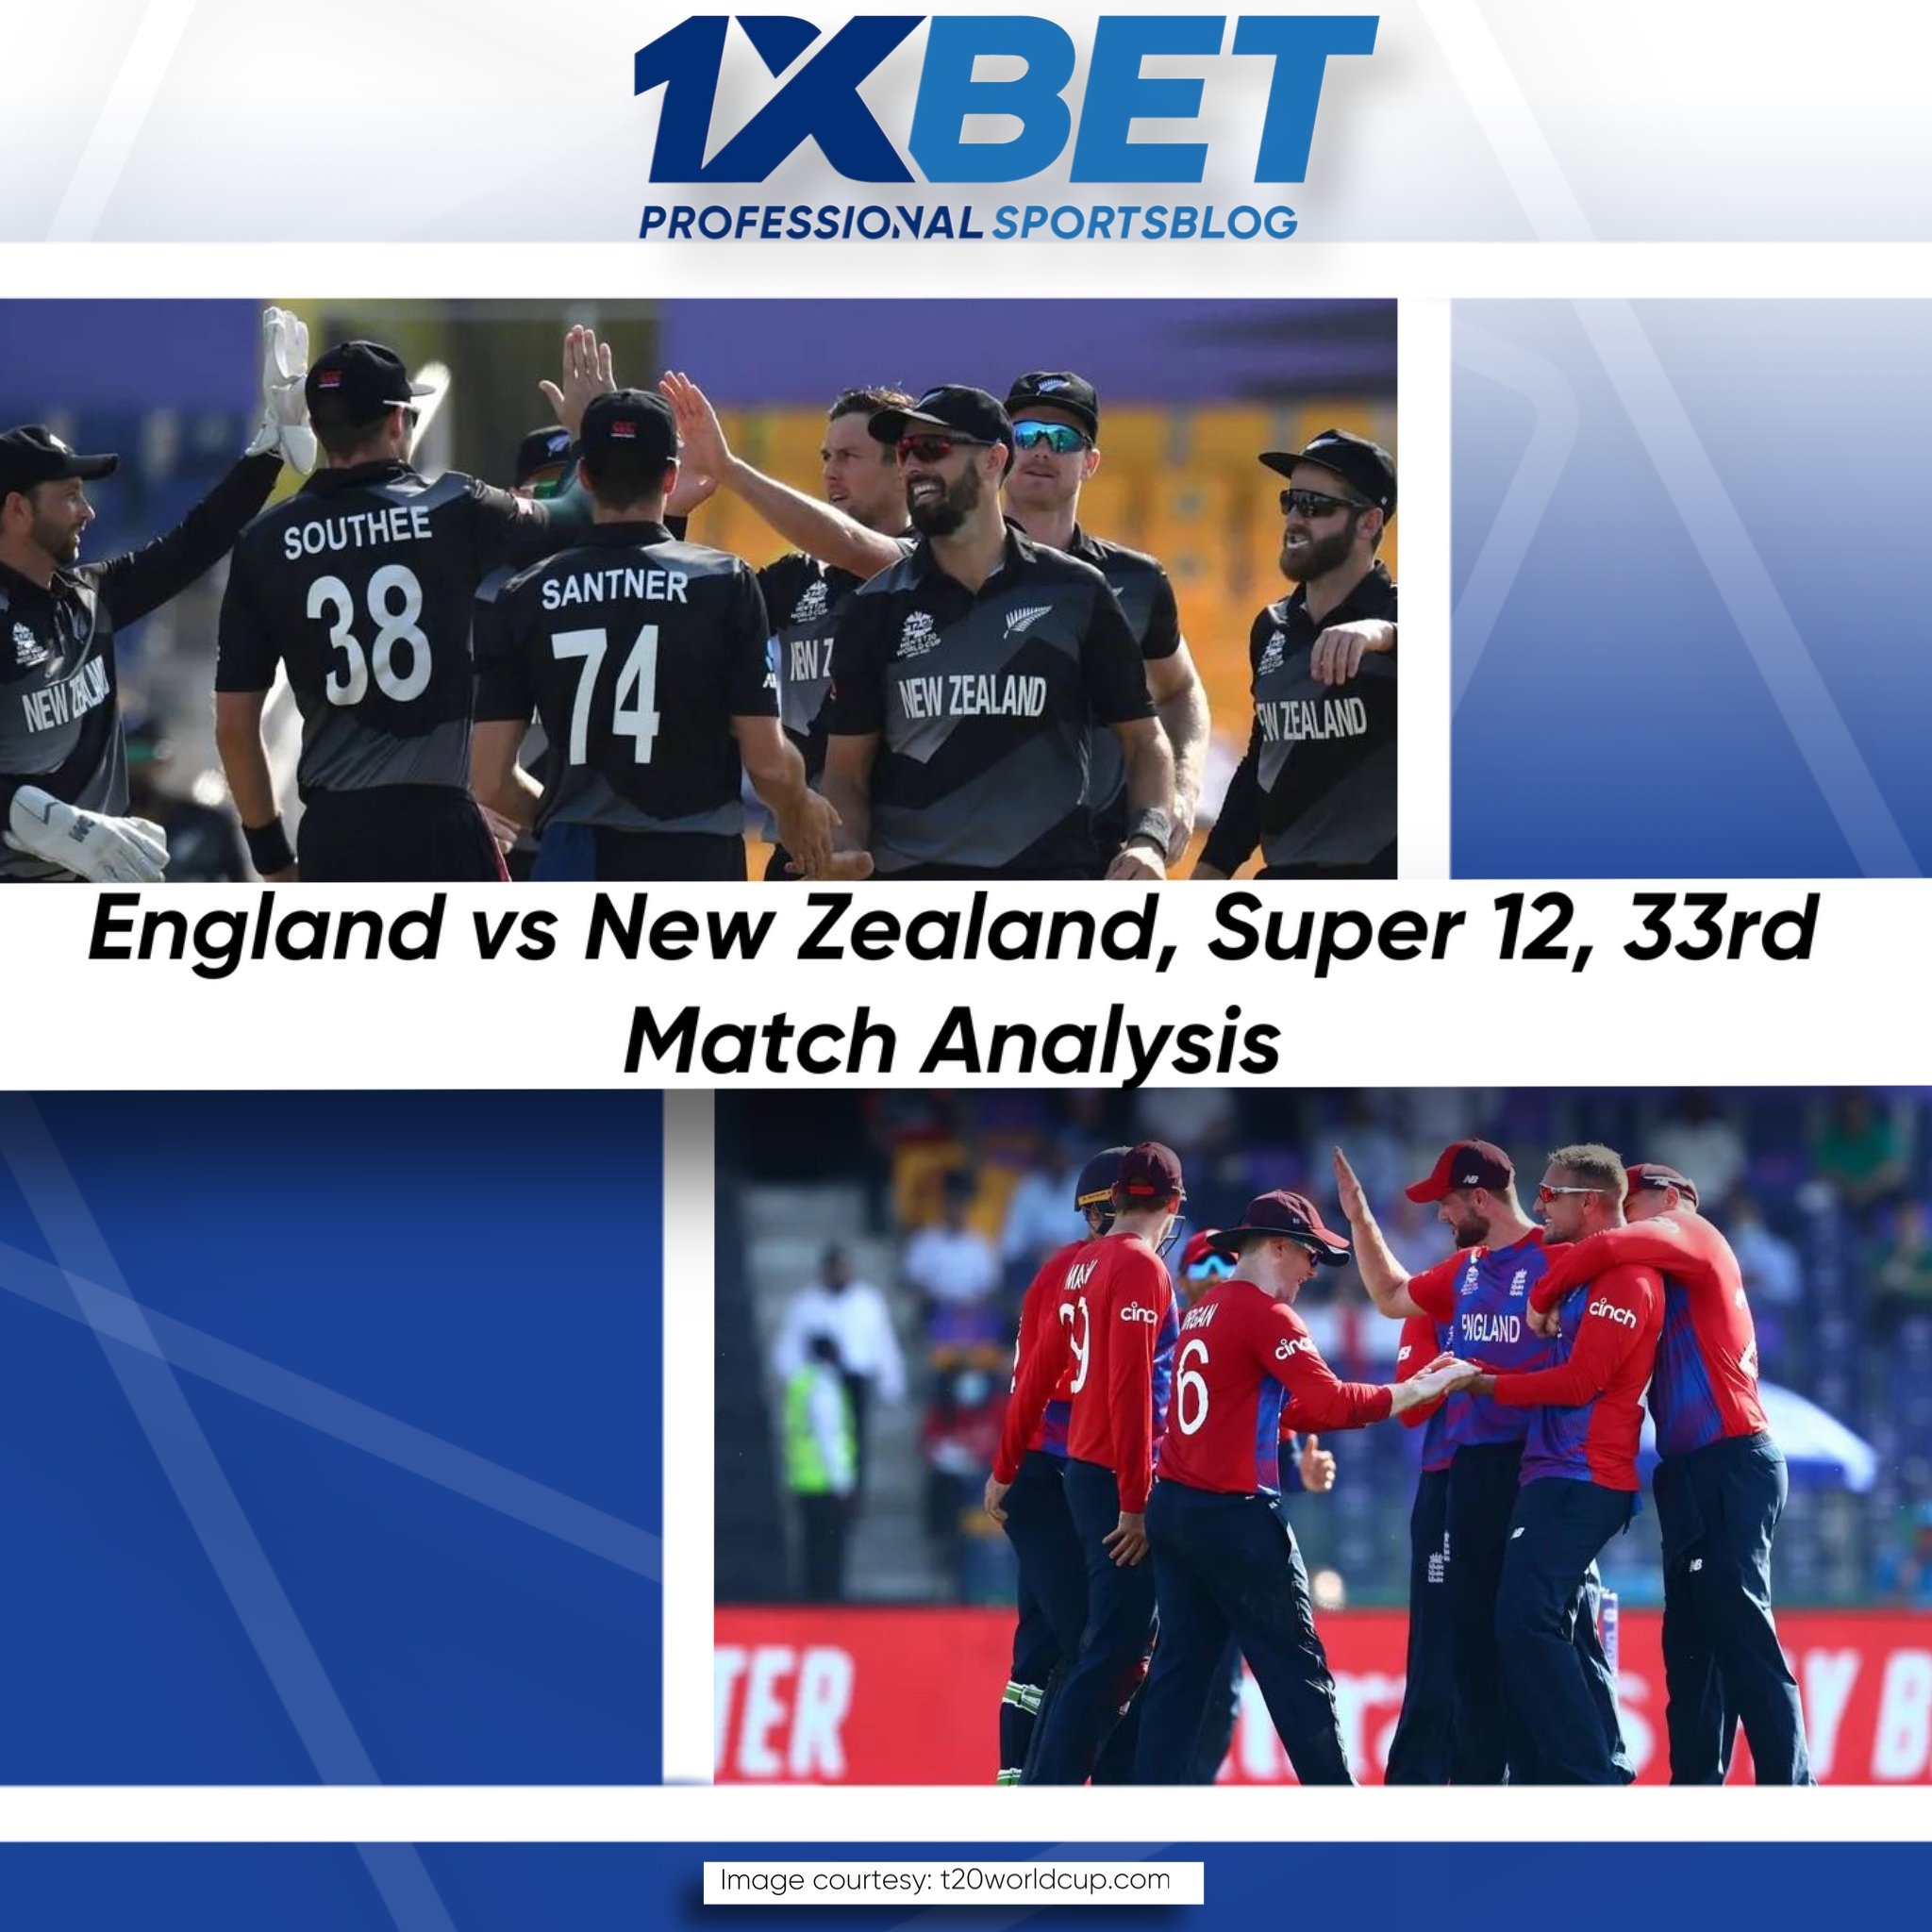 England vs New Zealand, Super 12, 33rd Match Analysis